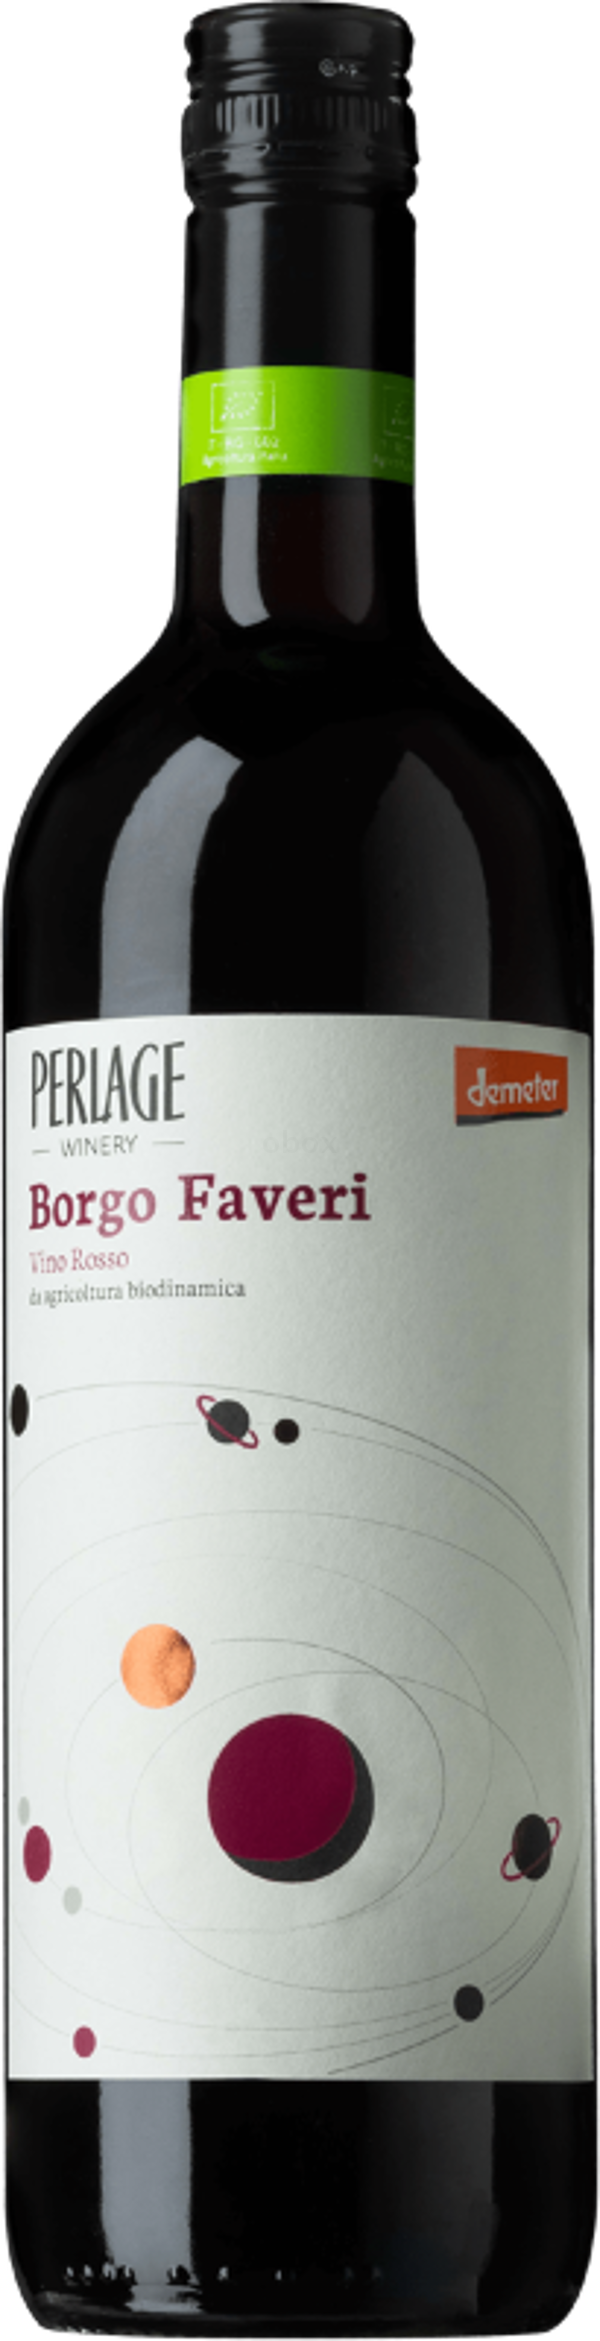 Produktfoto zu Borgo Faveri rot